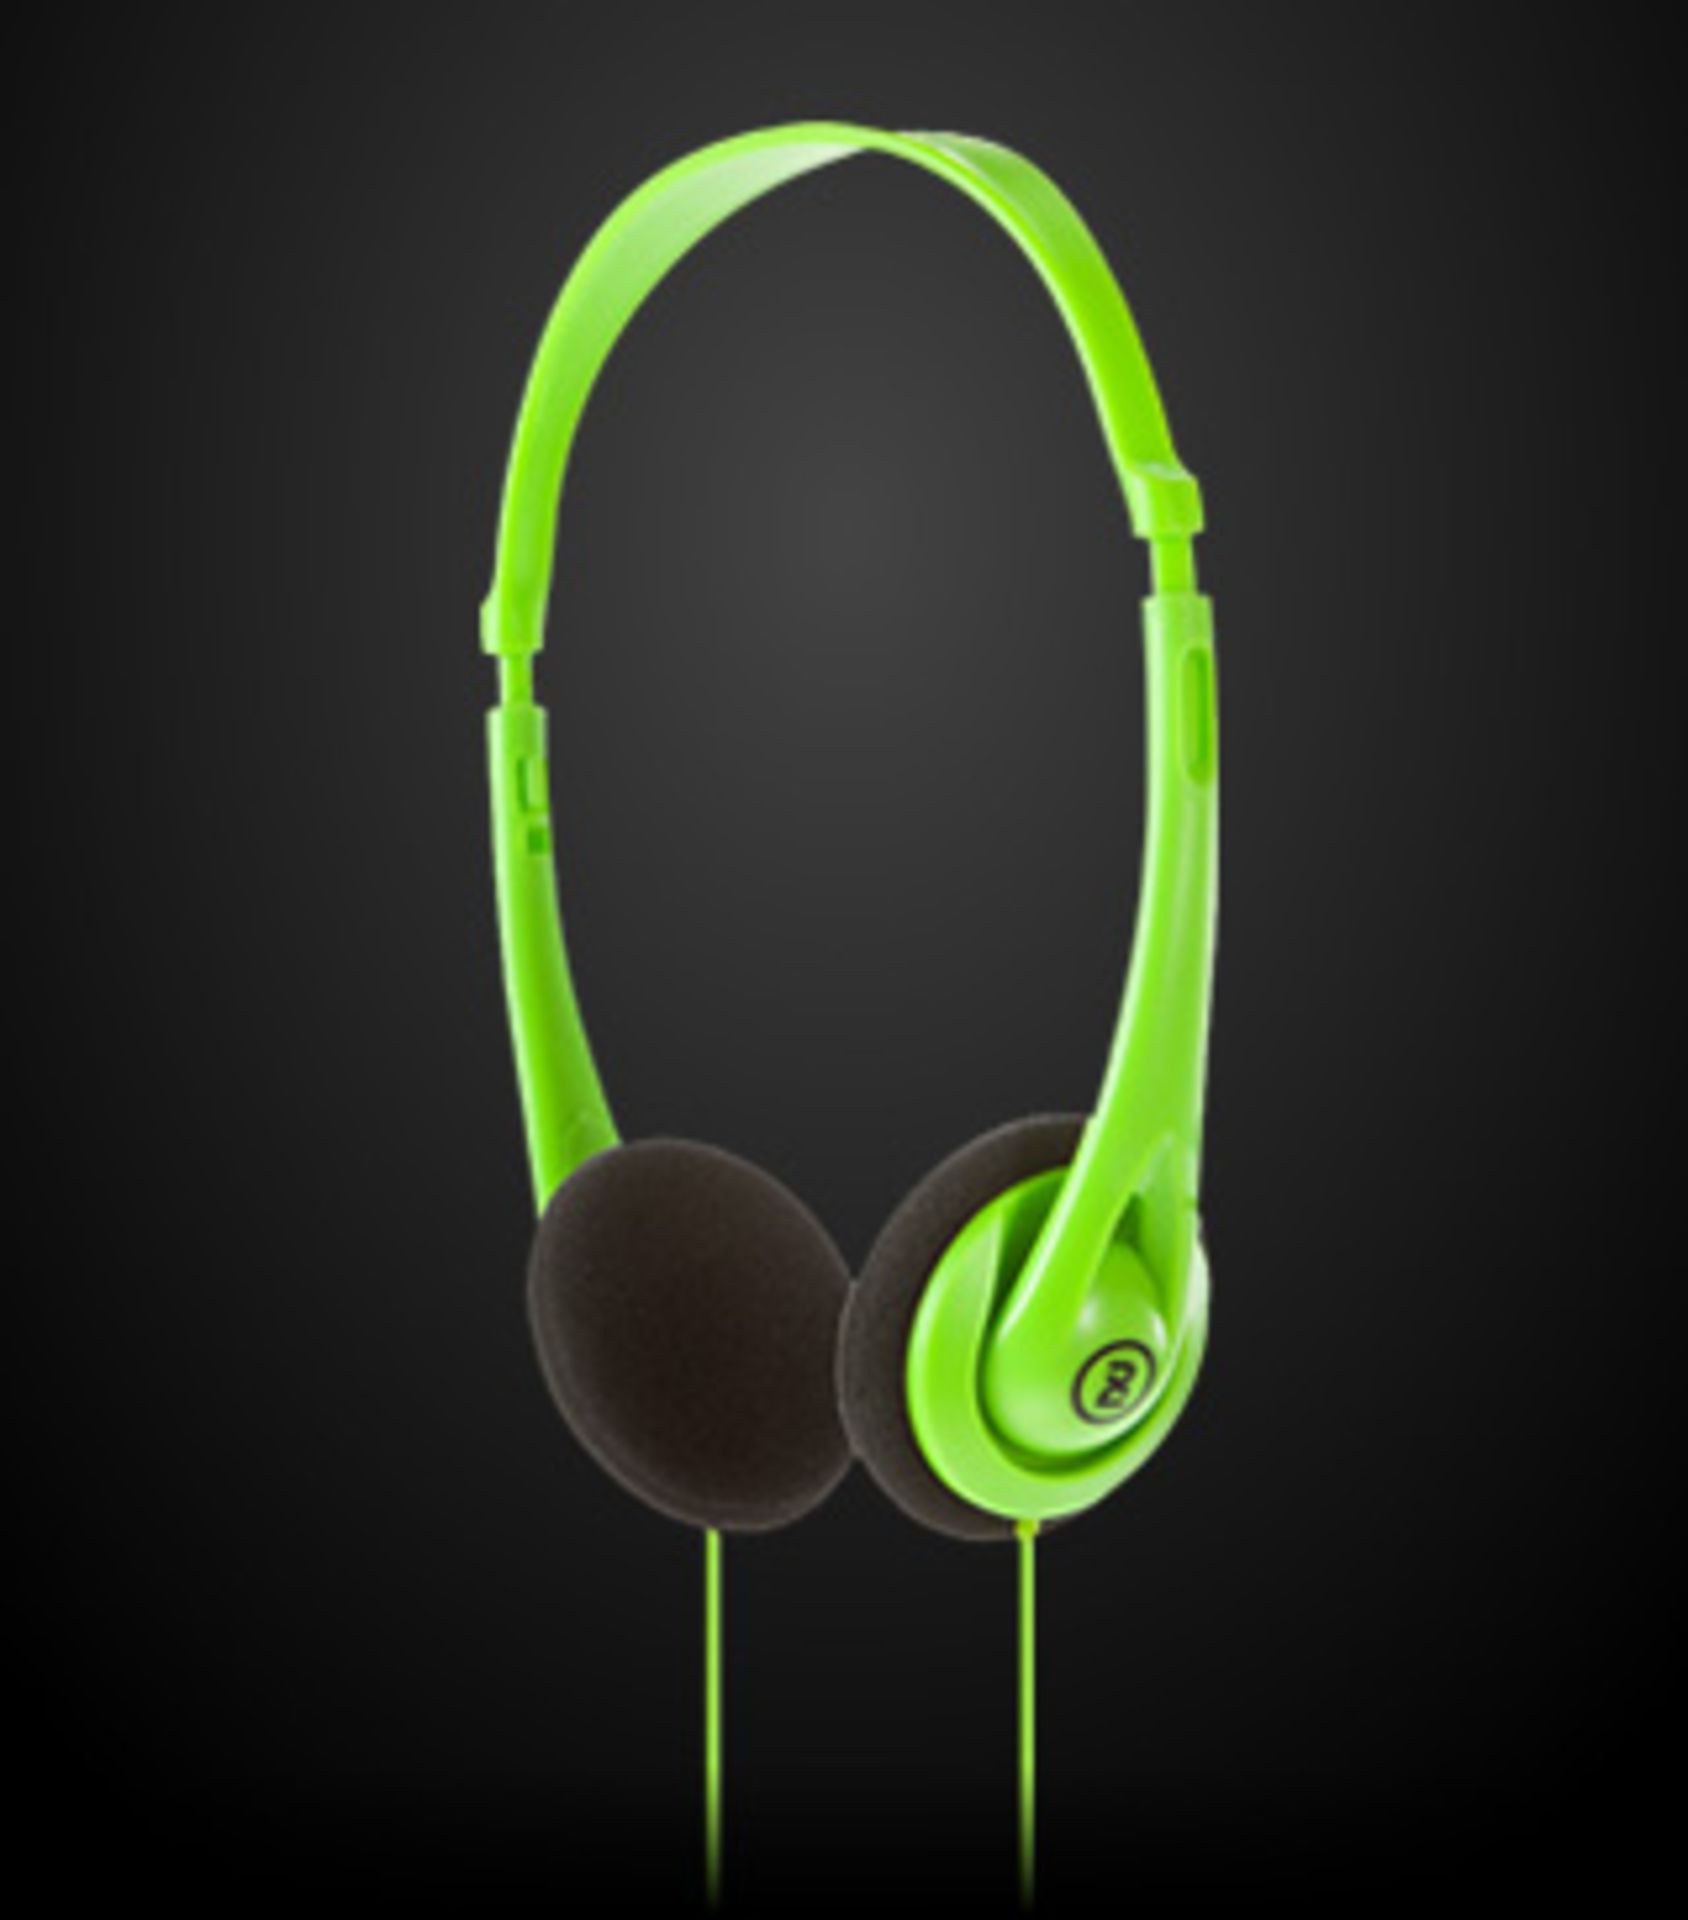 V *TRADE QTY* Brand New Skullcandy 2XL Wage Green Headphones With Adjustable Headband X 8 YOUR BID